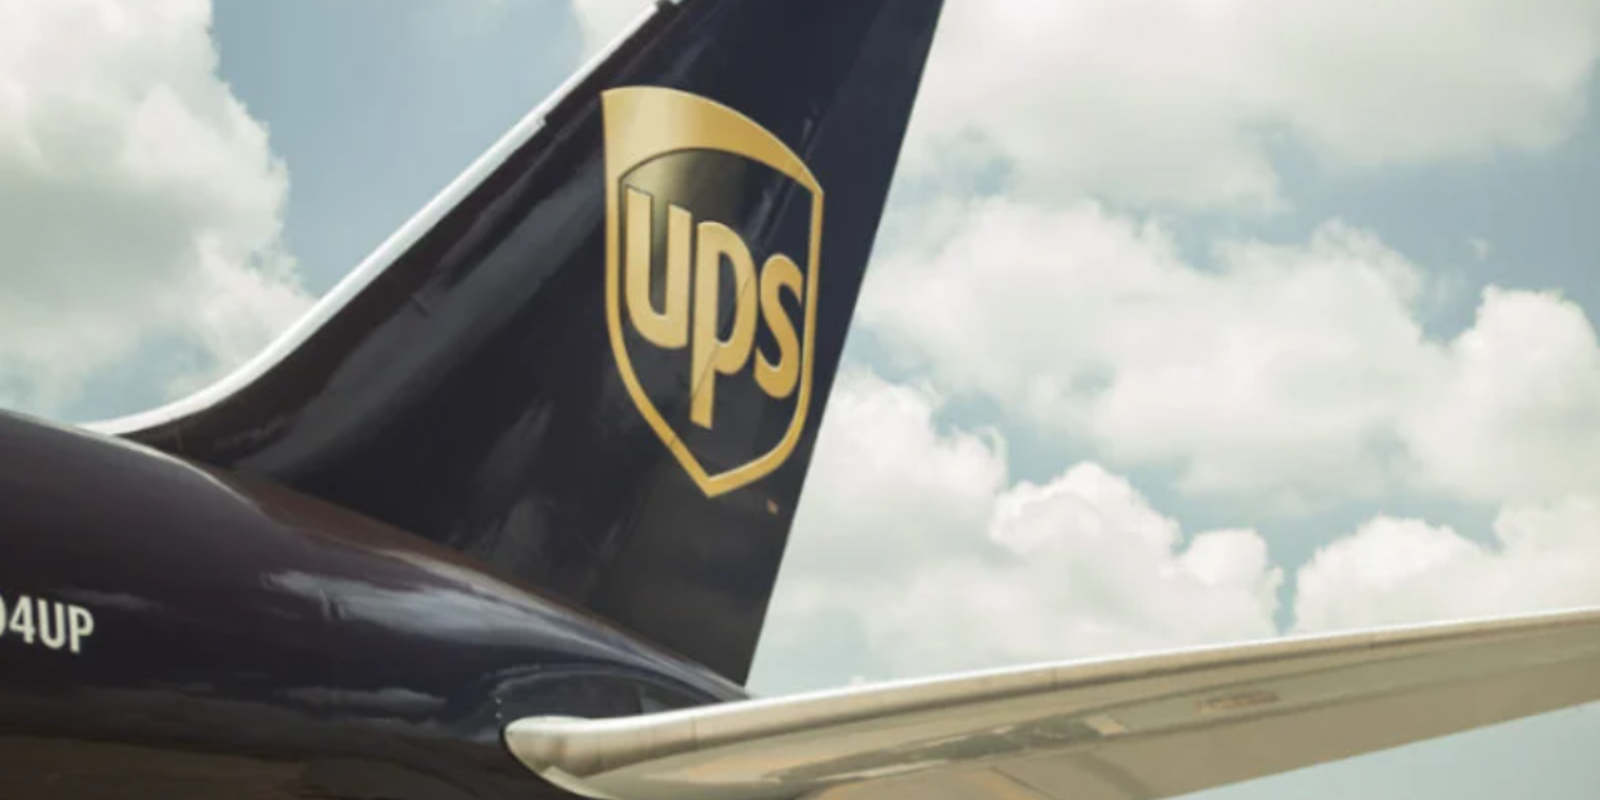 UPS logo on plane